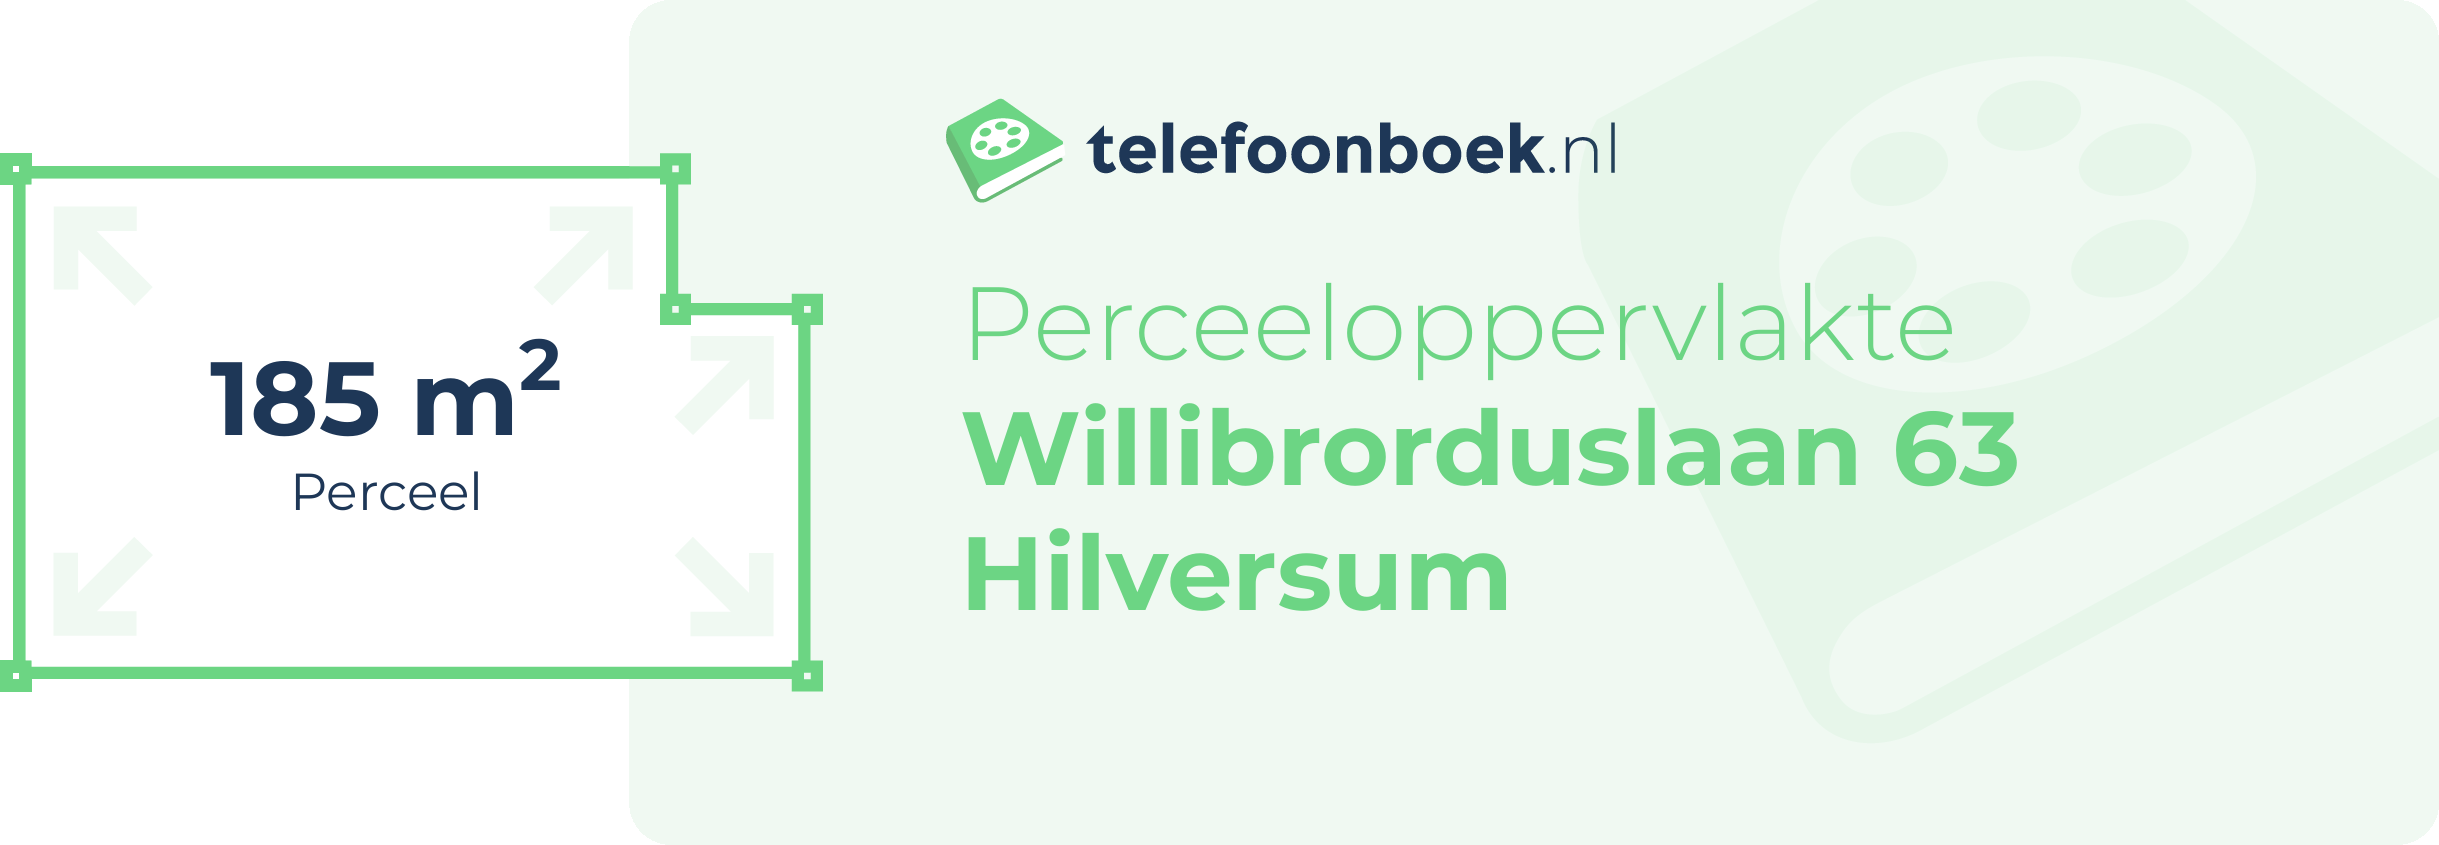 Perceeloppervlakte Willibrorduslaan 63 Hilversum